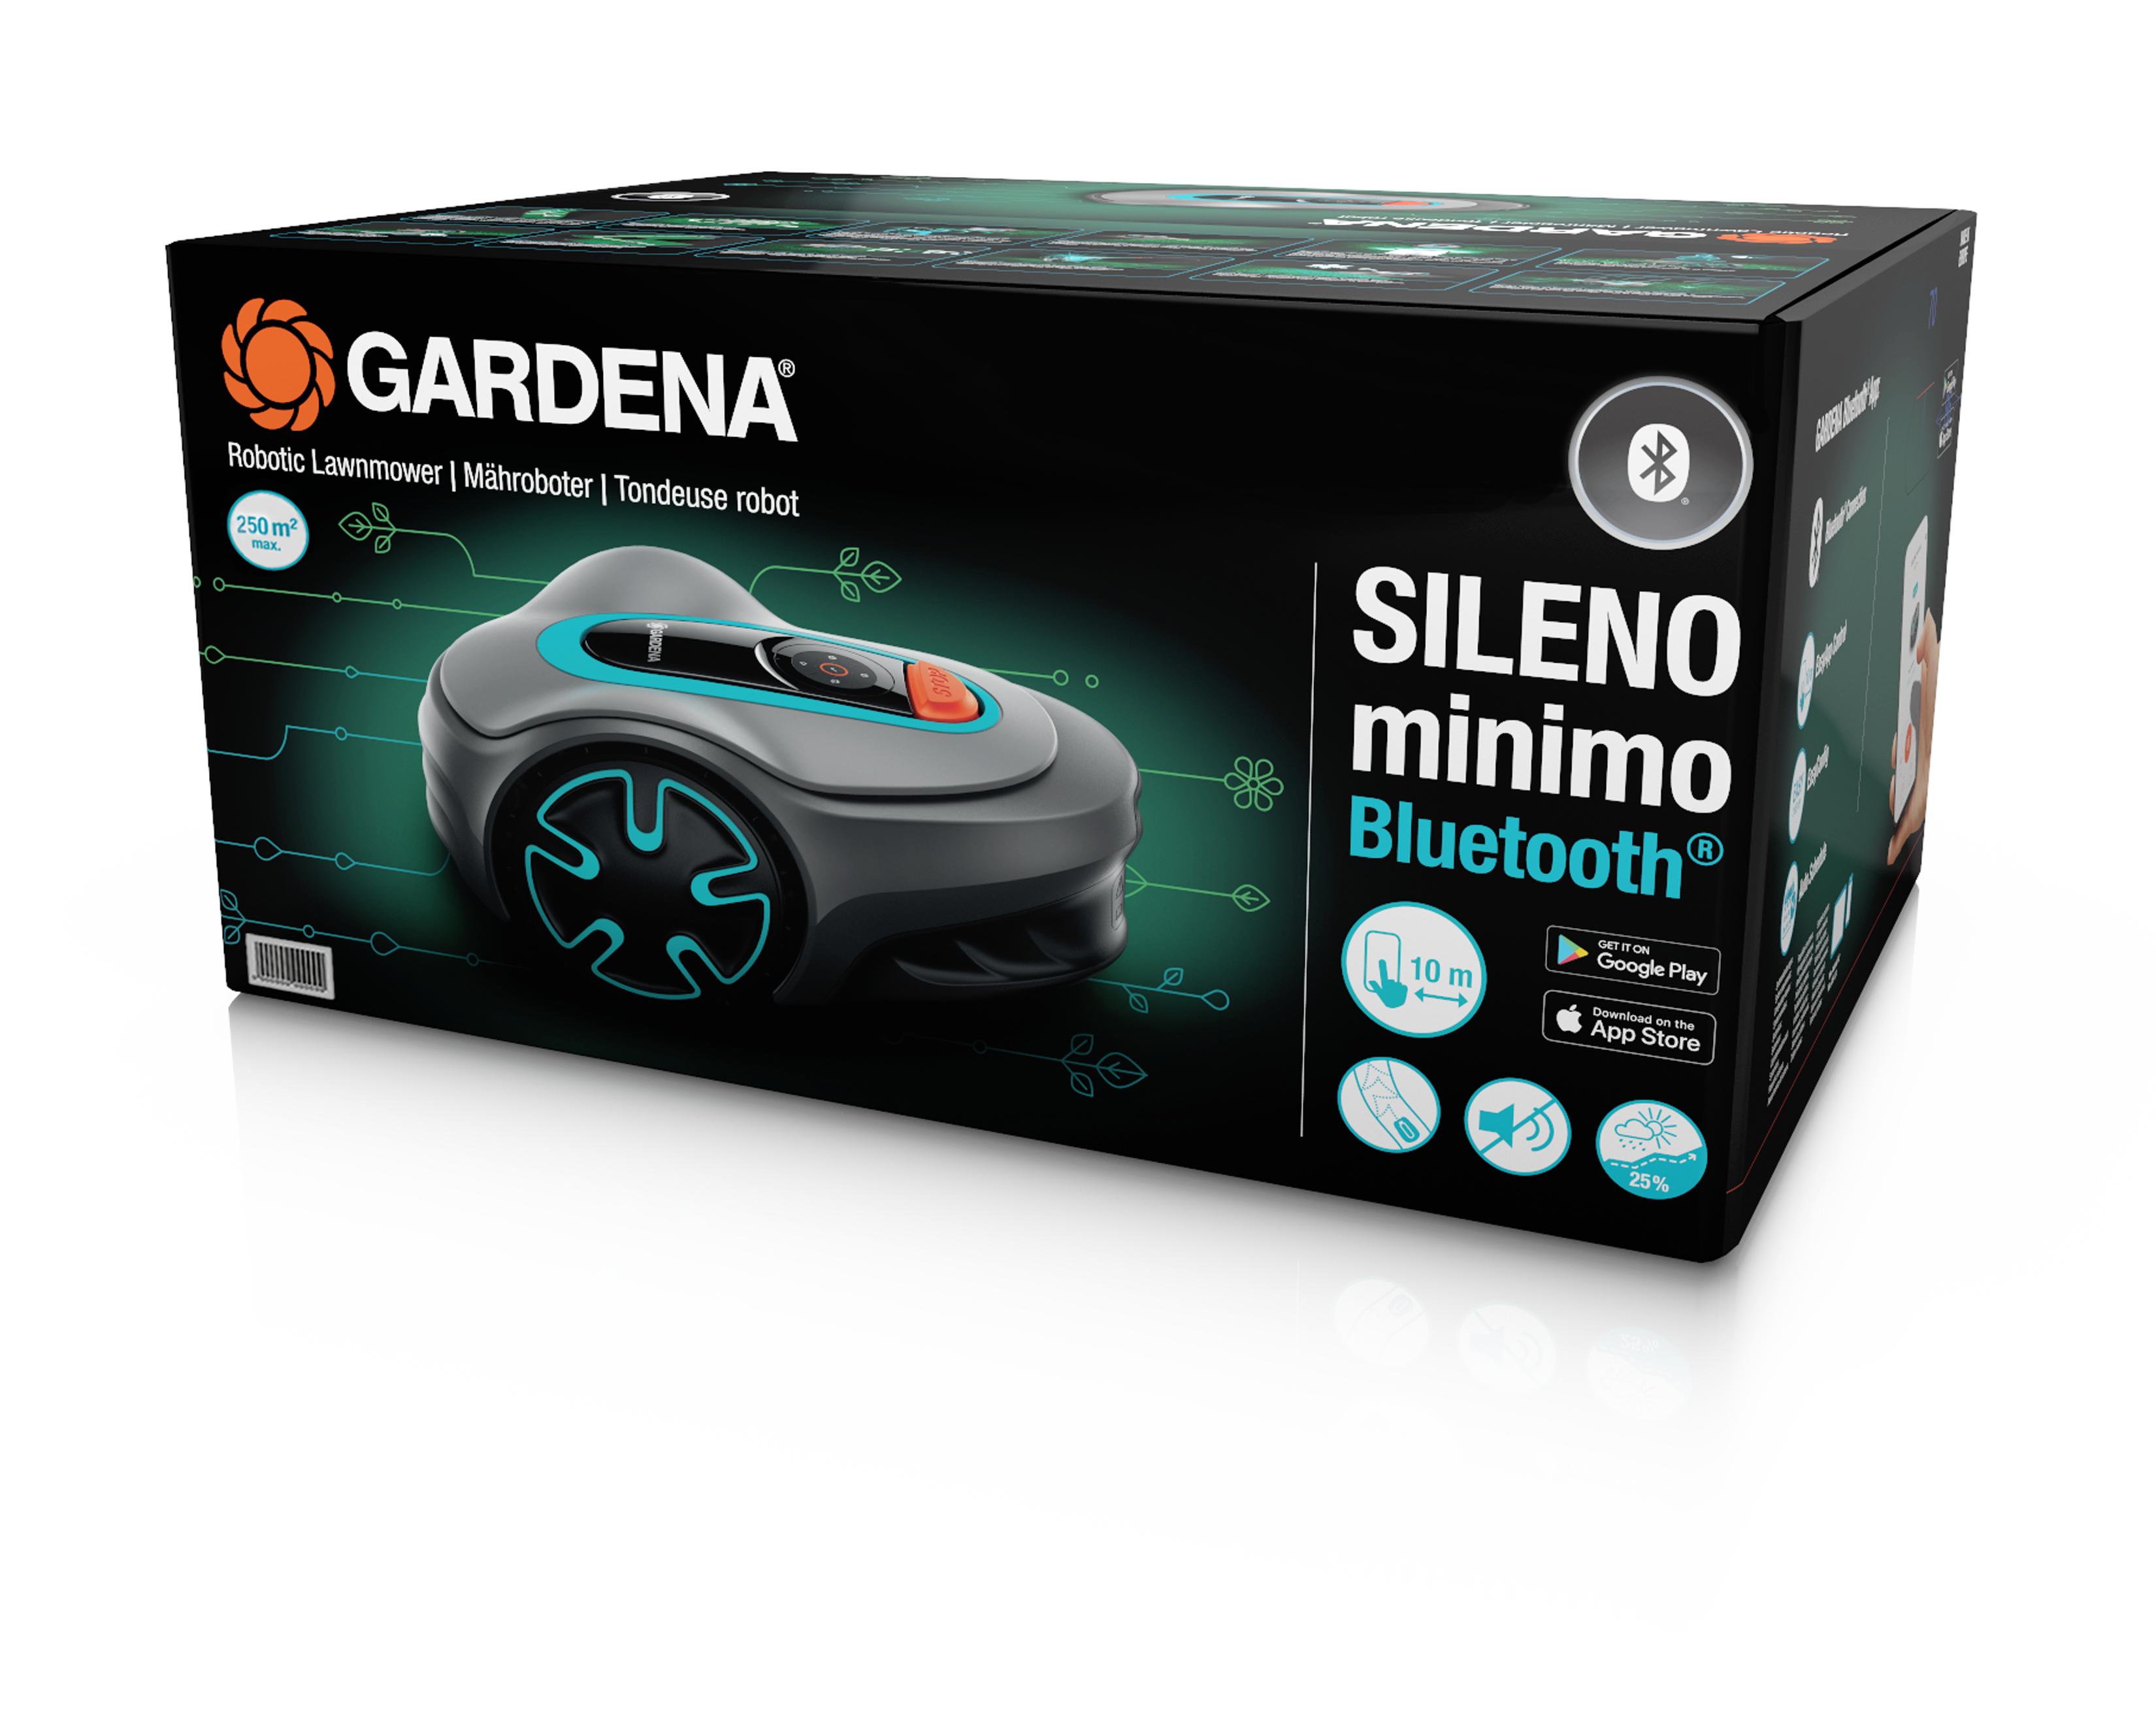 Gardena Sileno Minimo 250 mähroboter thumbnail-2